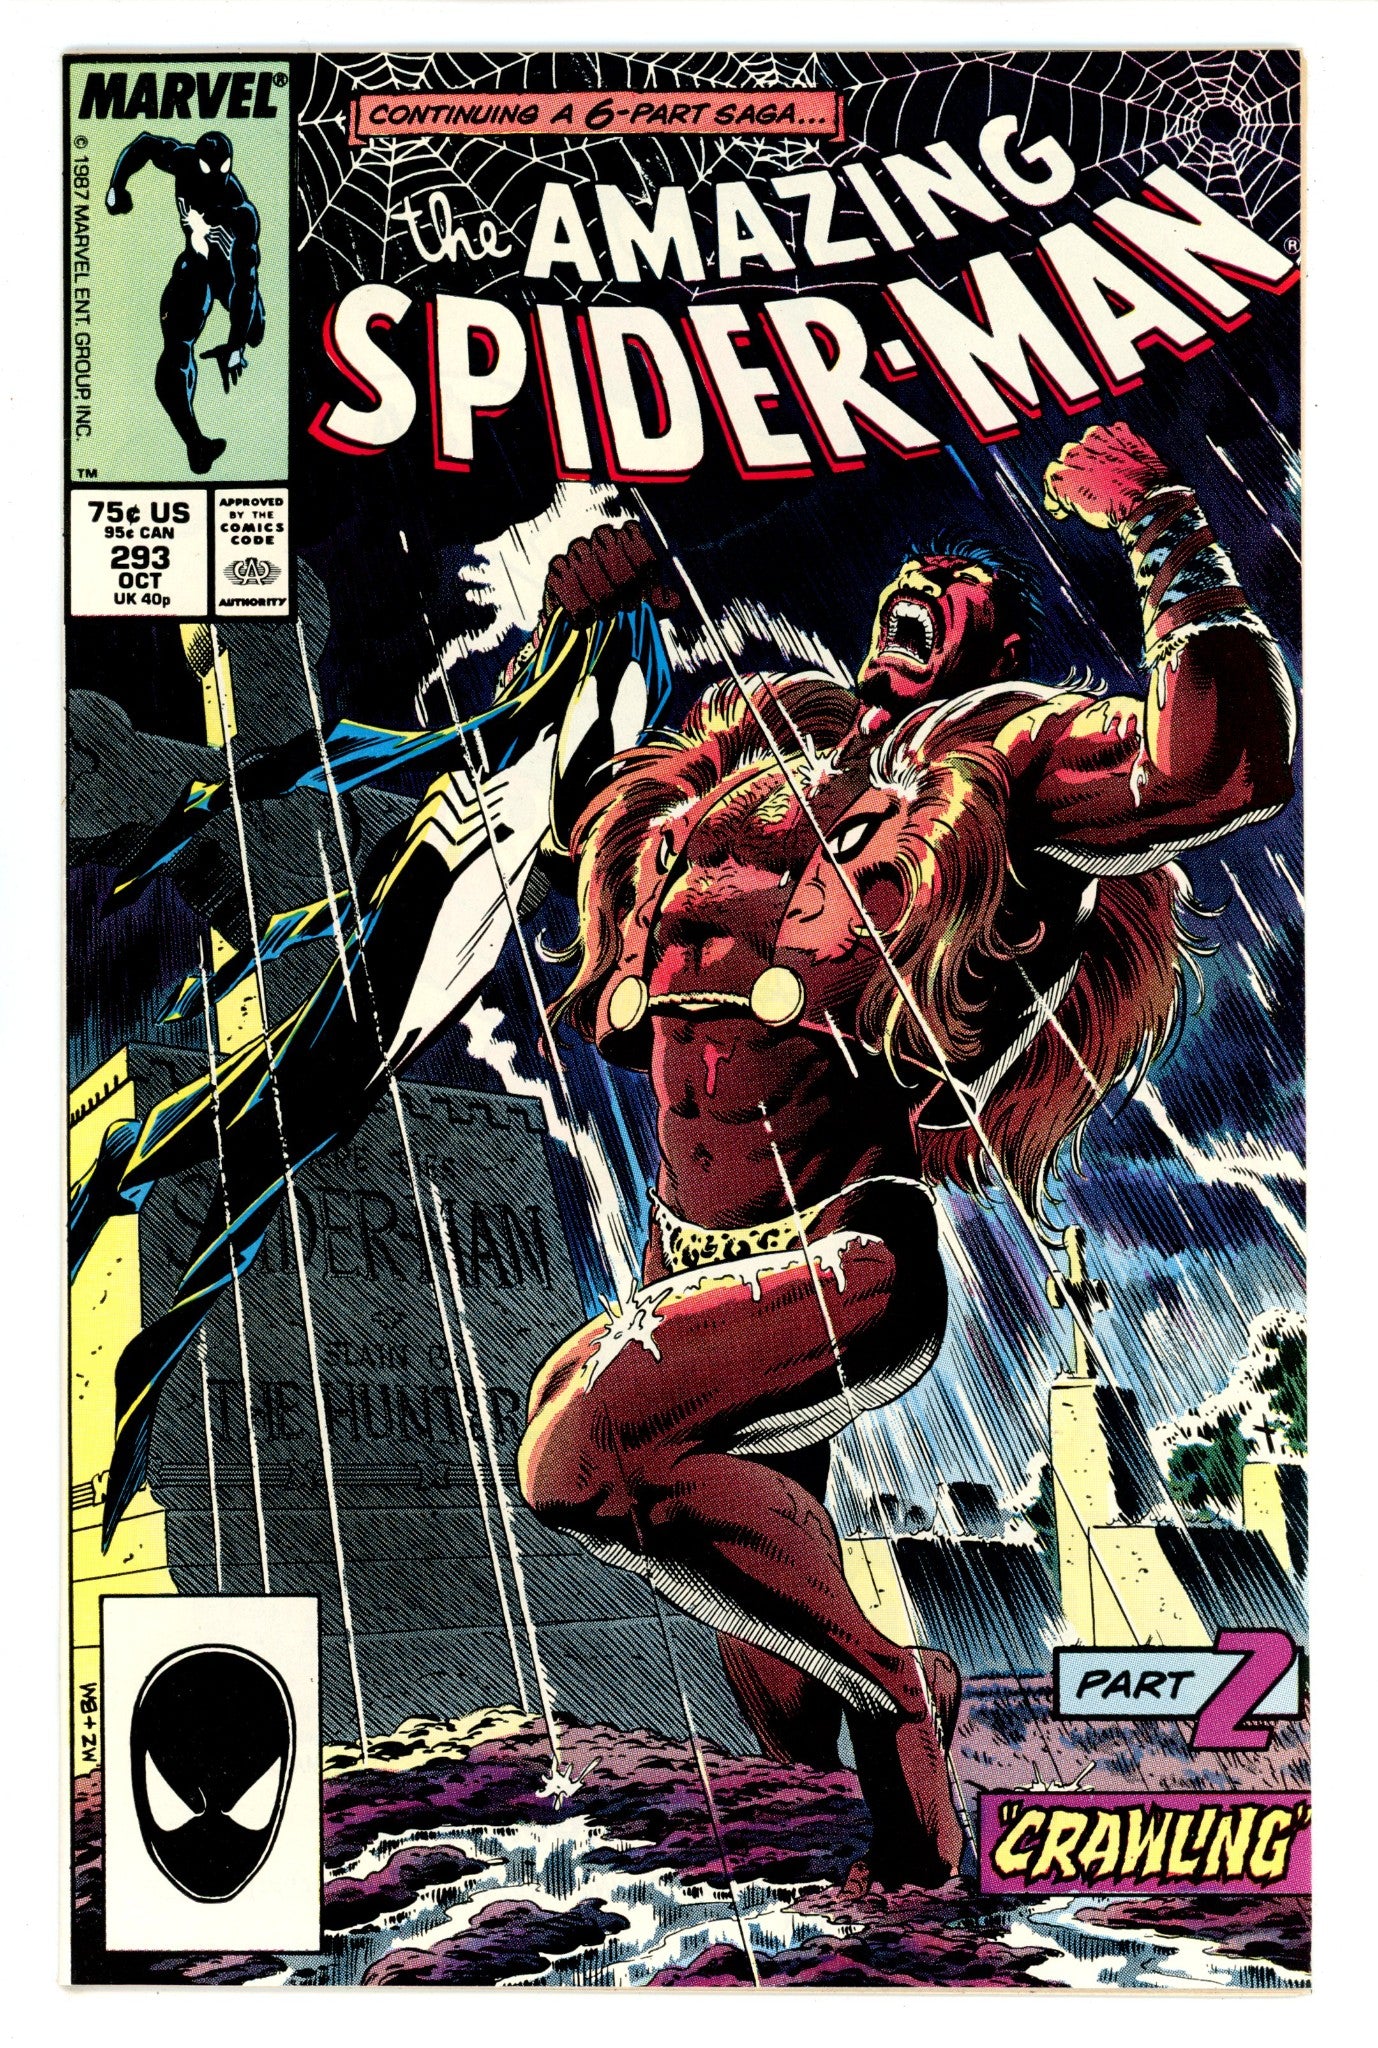 The Amazing Spider-Man Vol 1 293 VF/NM (9.0) (1987) 